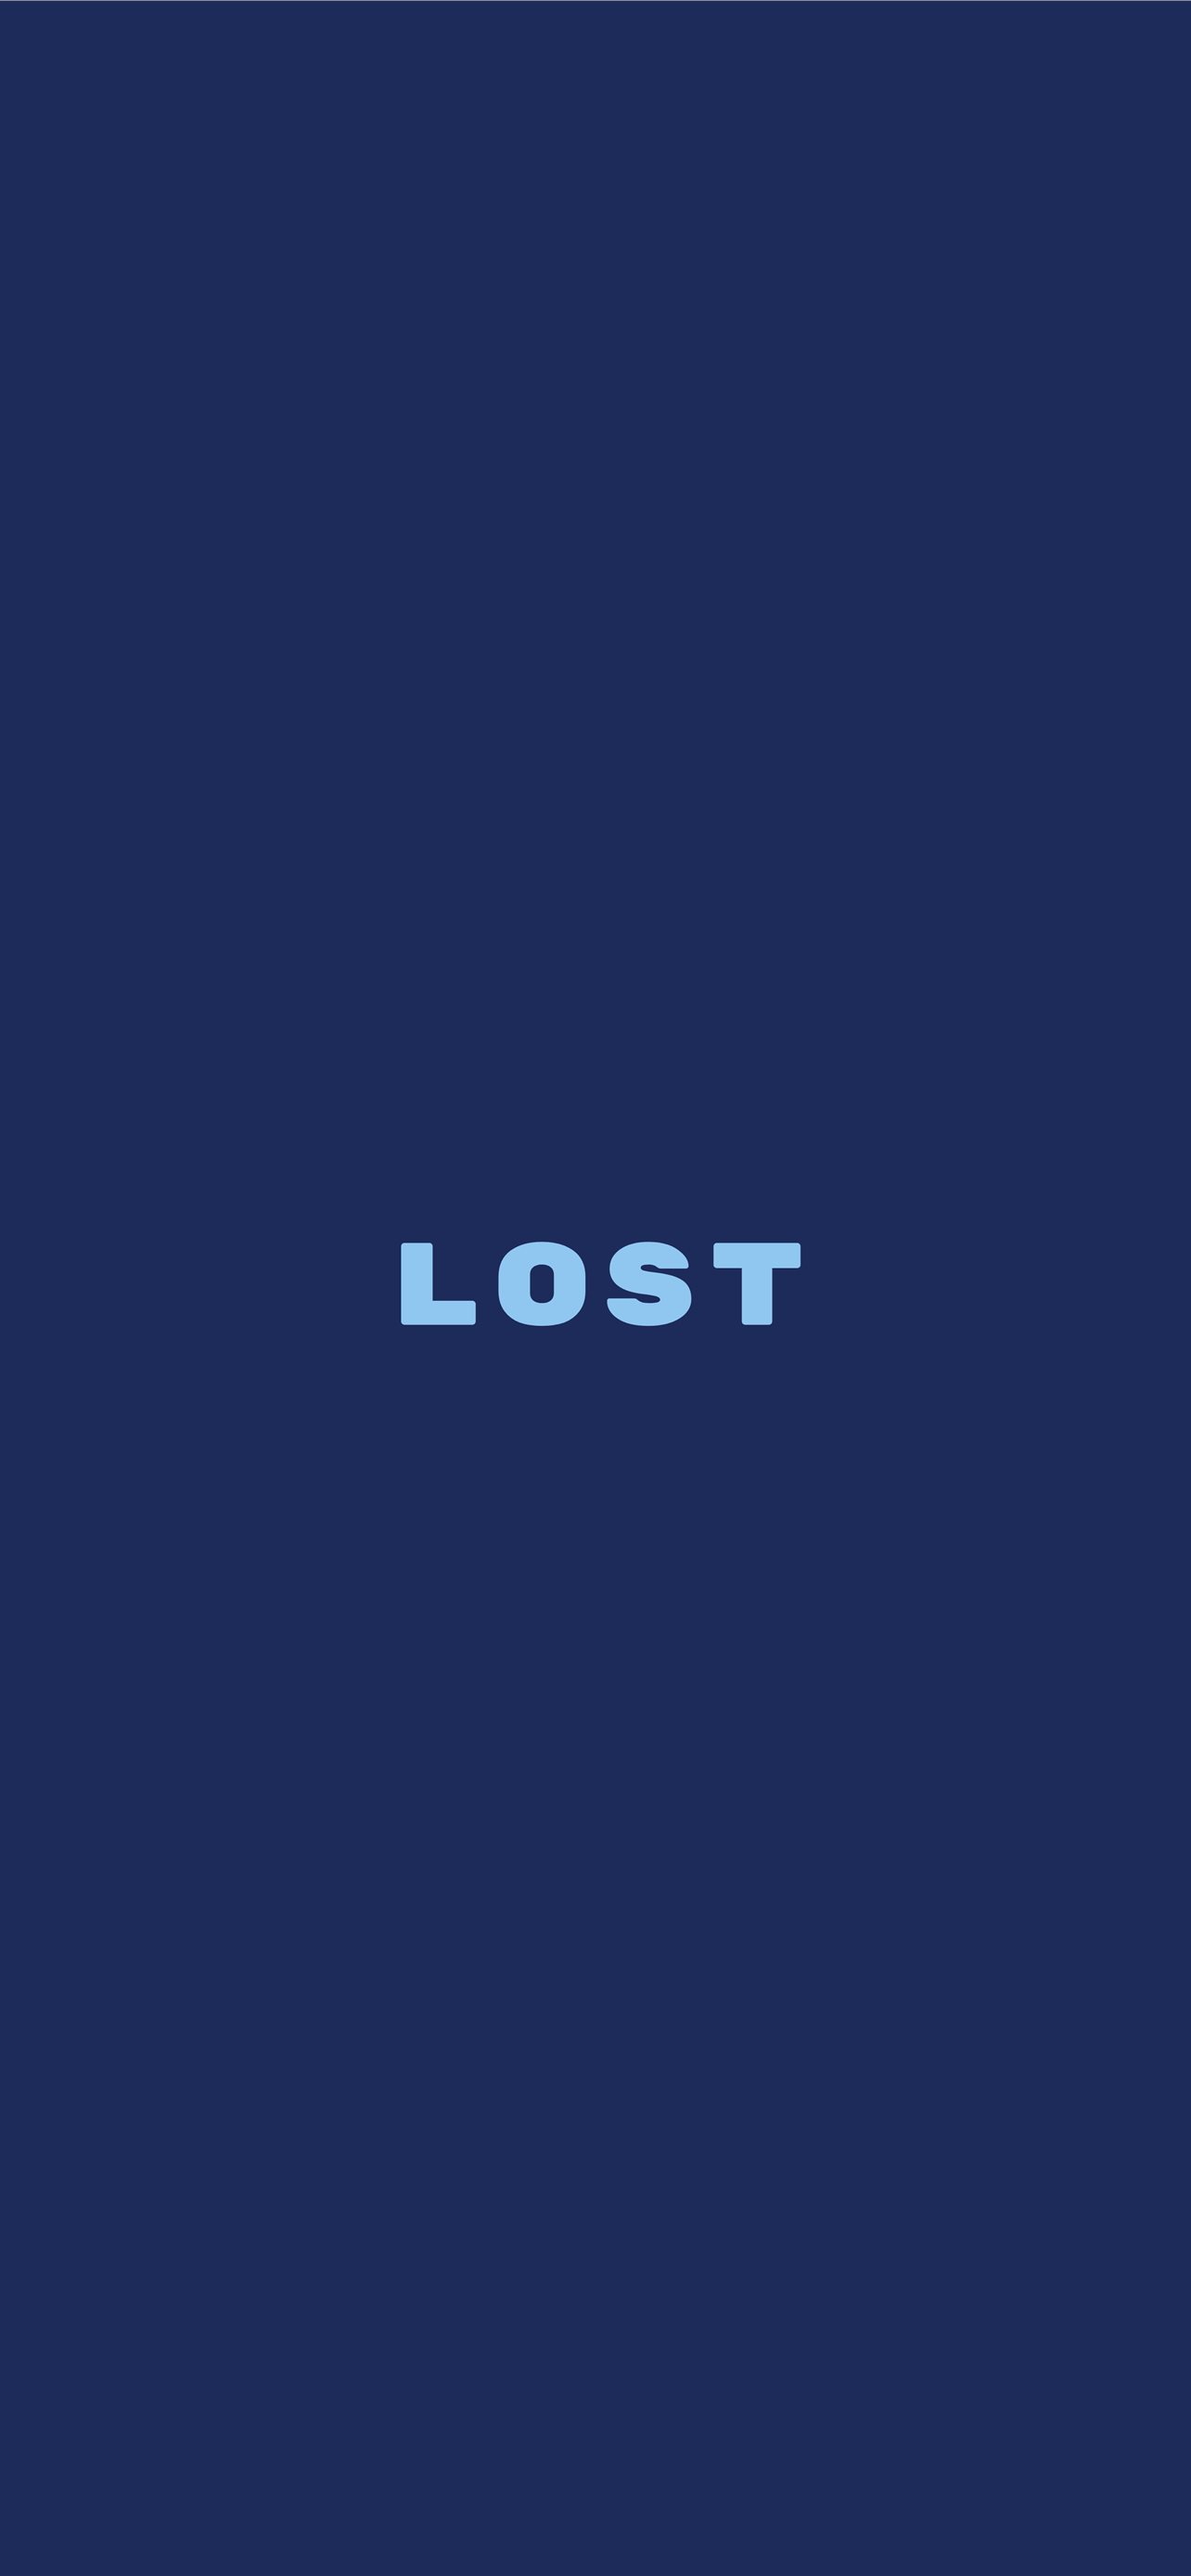 lost iPhone wallpaper 